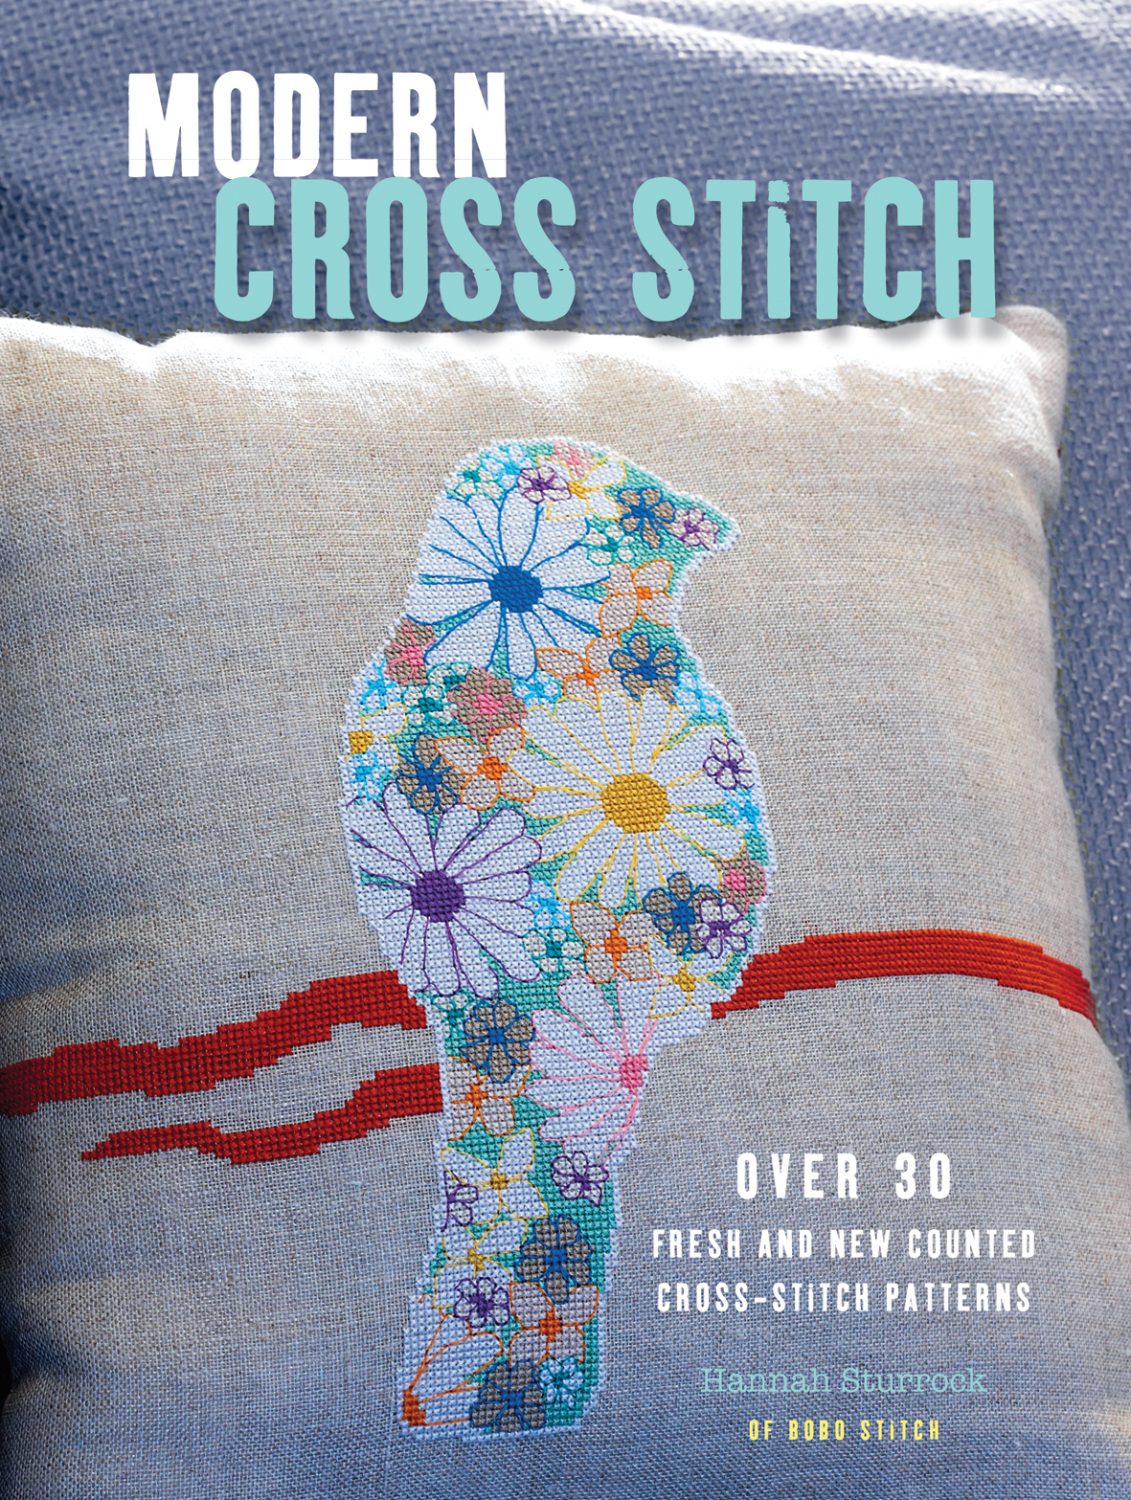 Modern Cross Stitch by Hannah Sturrock